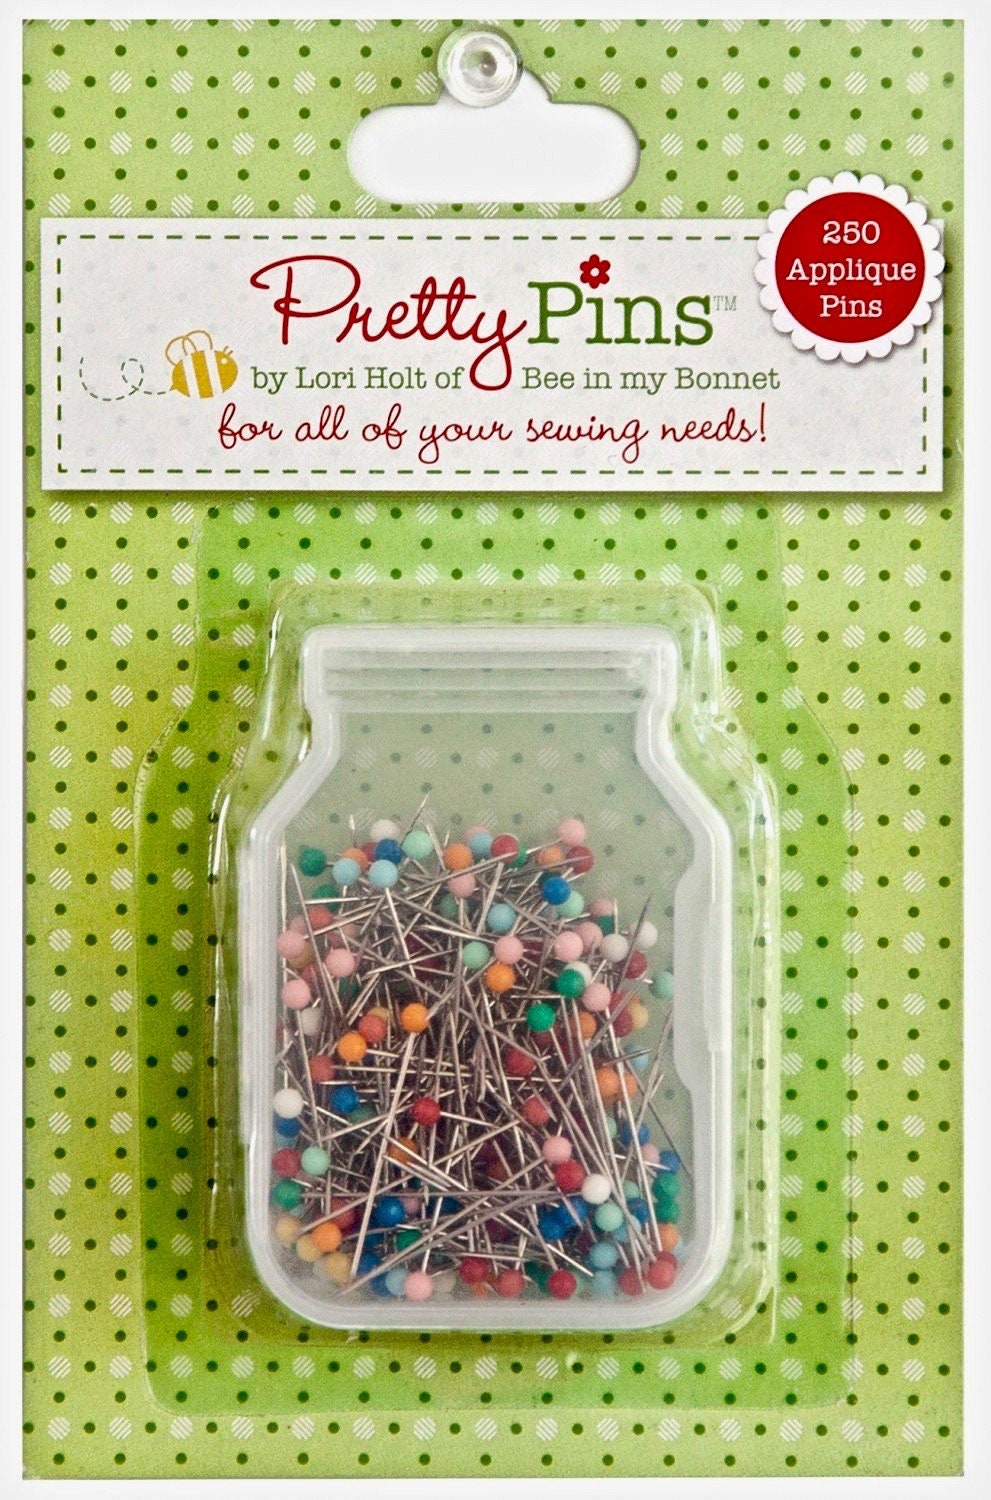 Pretty Pins By Lori Holt - Applique Pins Box Of 250 - Riley Blake Designs